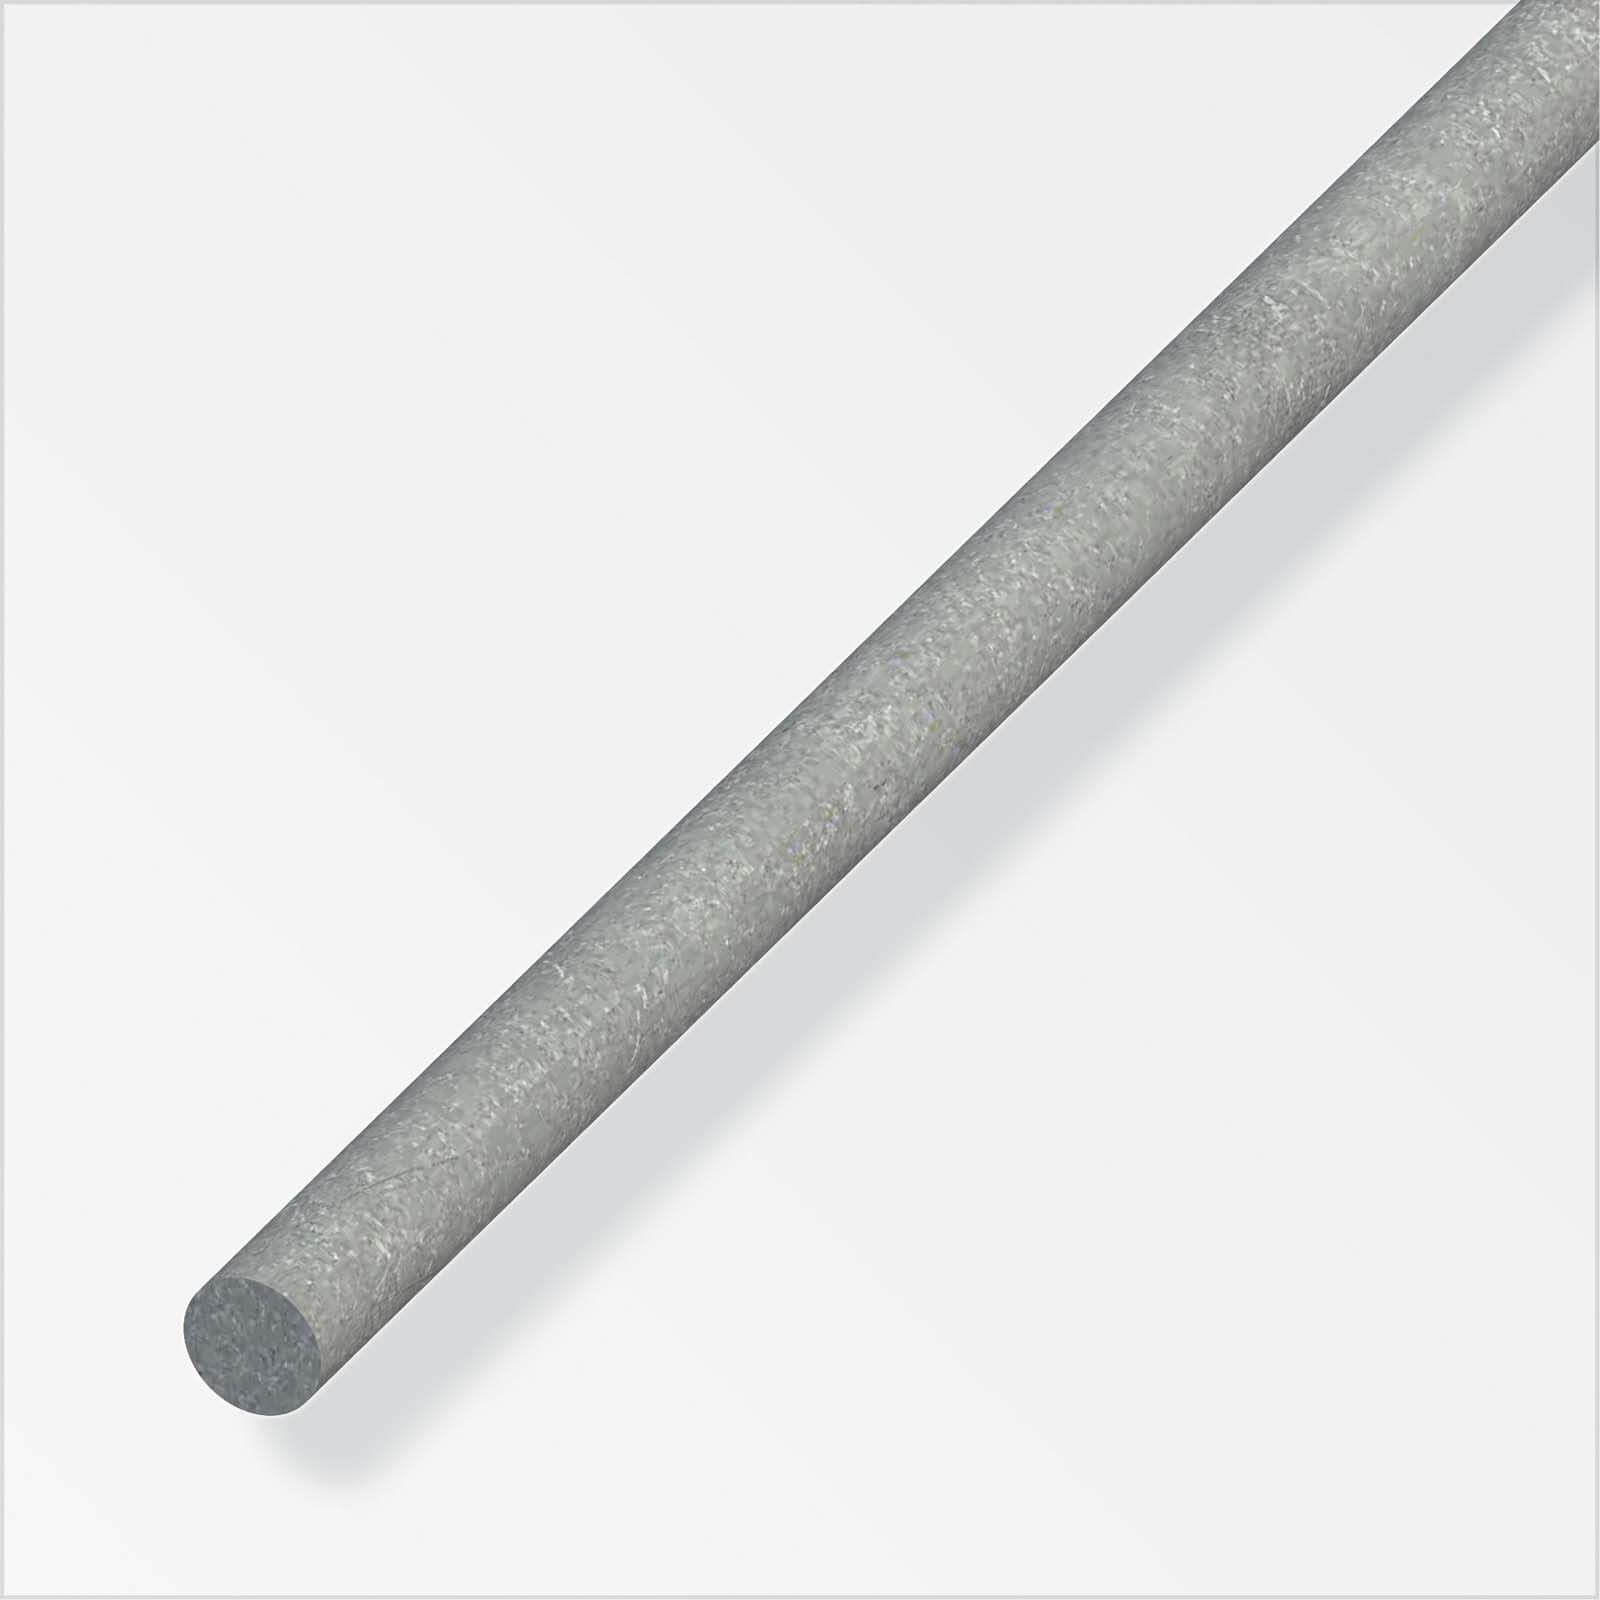 Drawn Steel Round Bar - 1m x 4 x 4mm